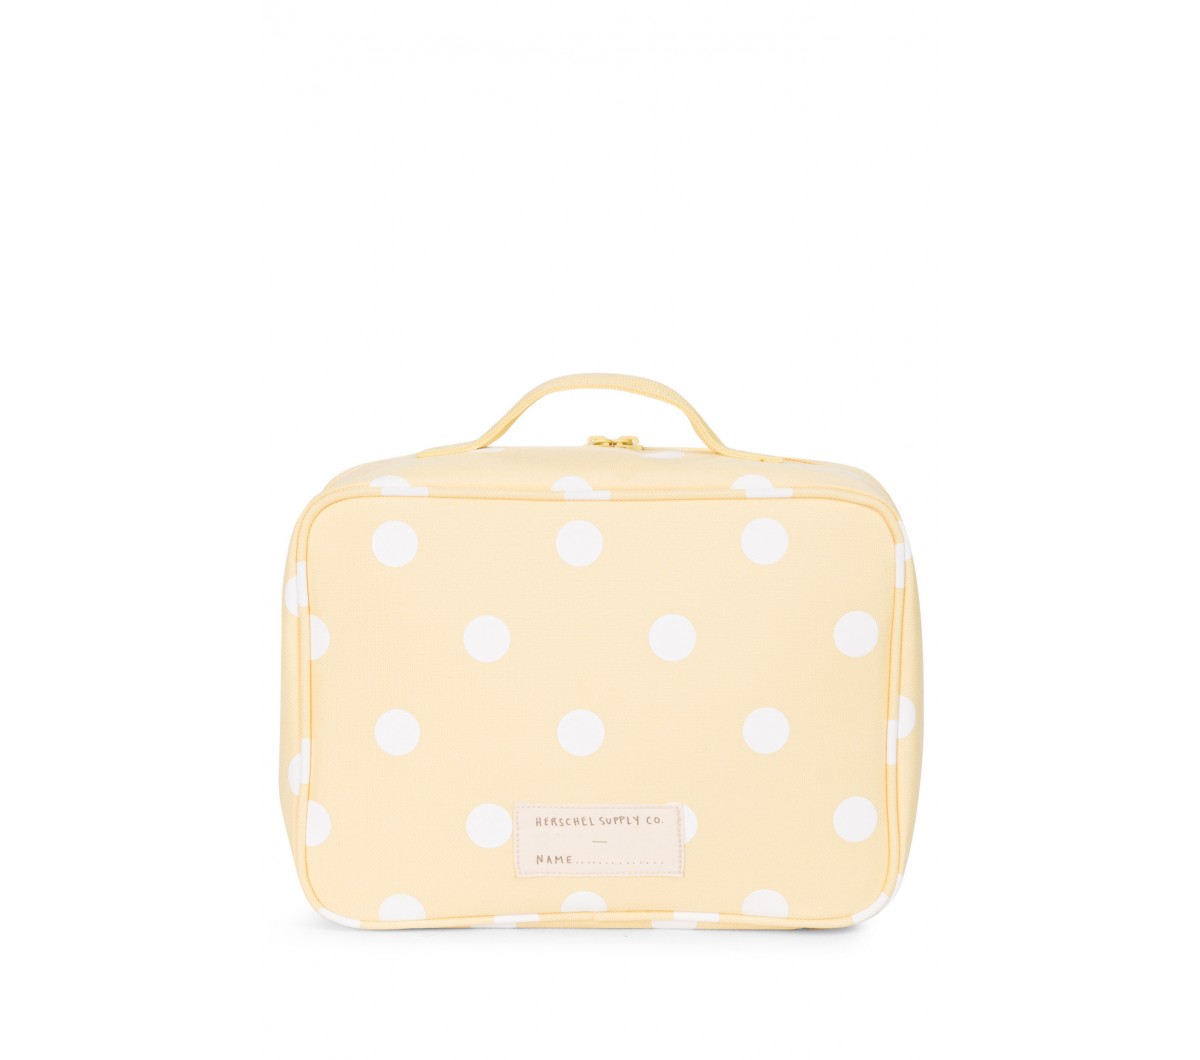 https://www.orangemayonnaise.com/image/shrink/55912/1200/1060/herschel-pop-quiz-lunchbox-herschel-pop-quiz-lunchbox-popcorn-yellow-and-white-polka-dot.jpg